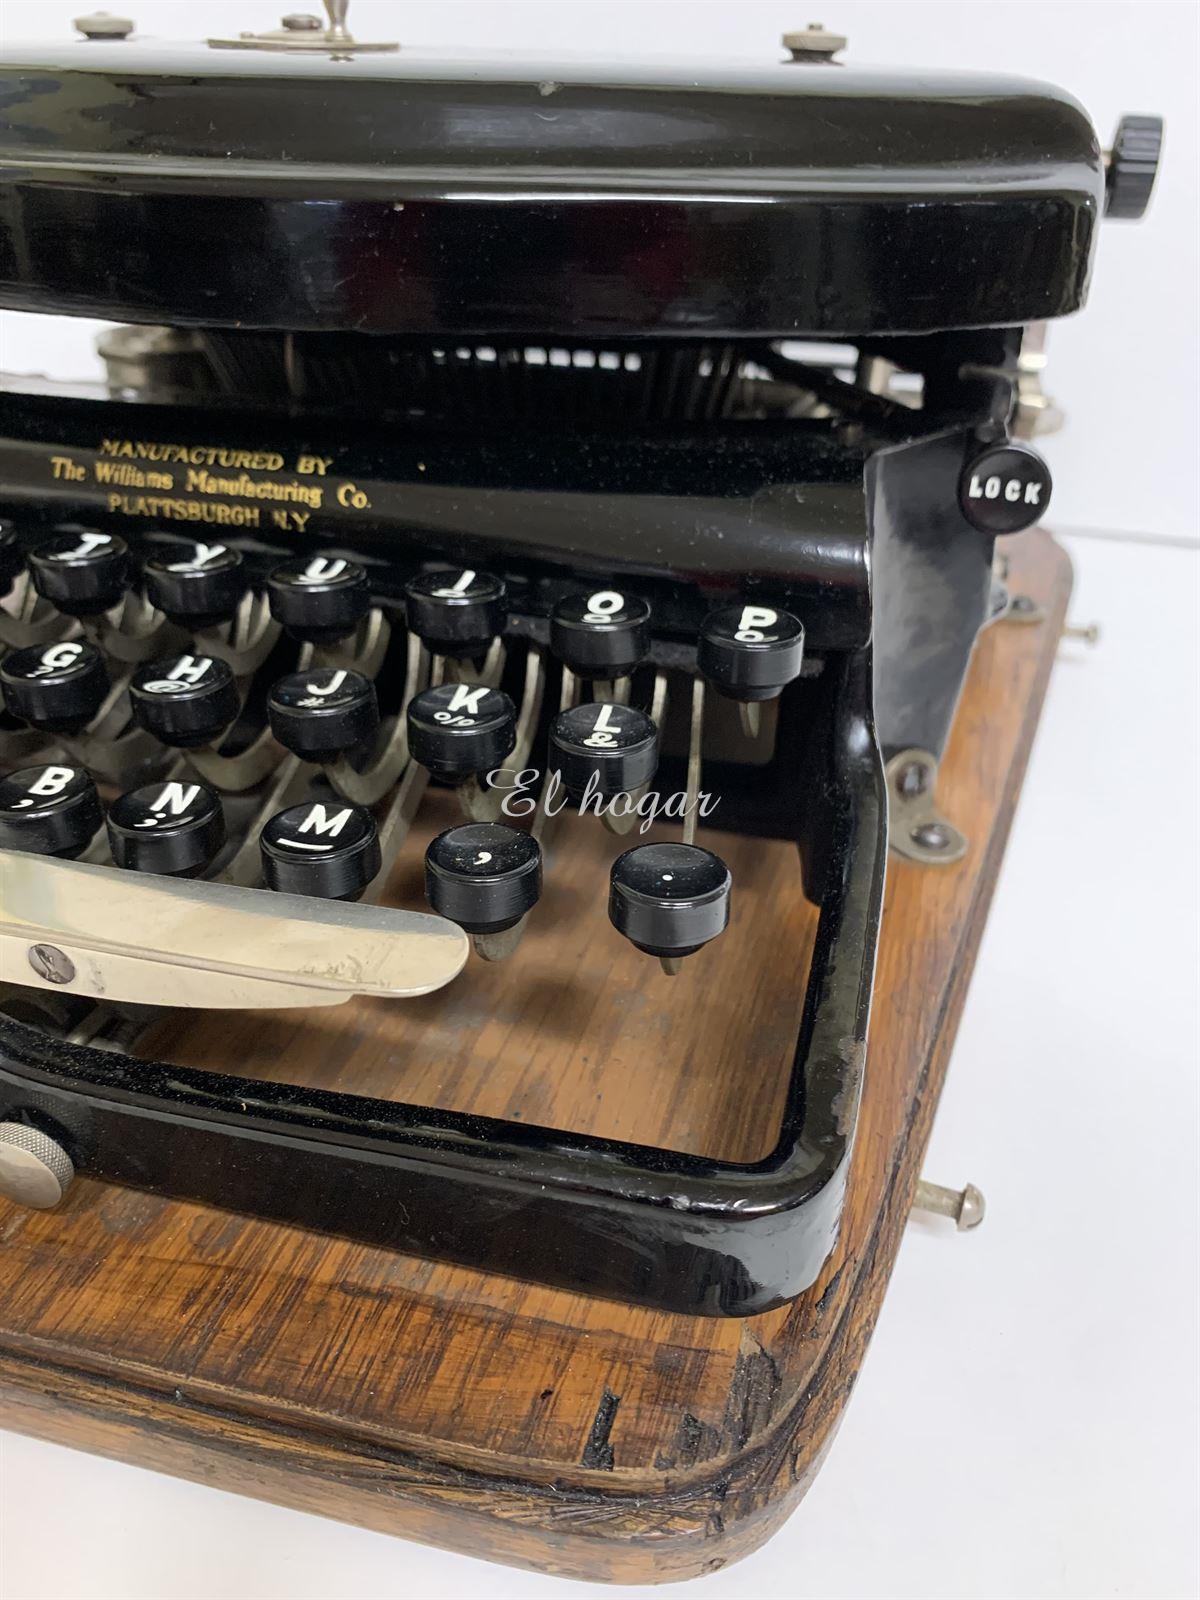 Maquina de escribir Wellington - Imagen 3